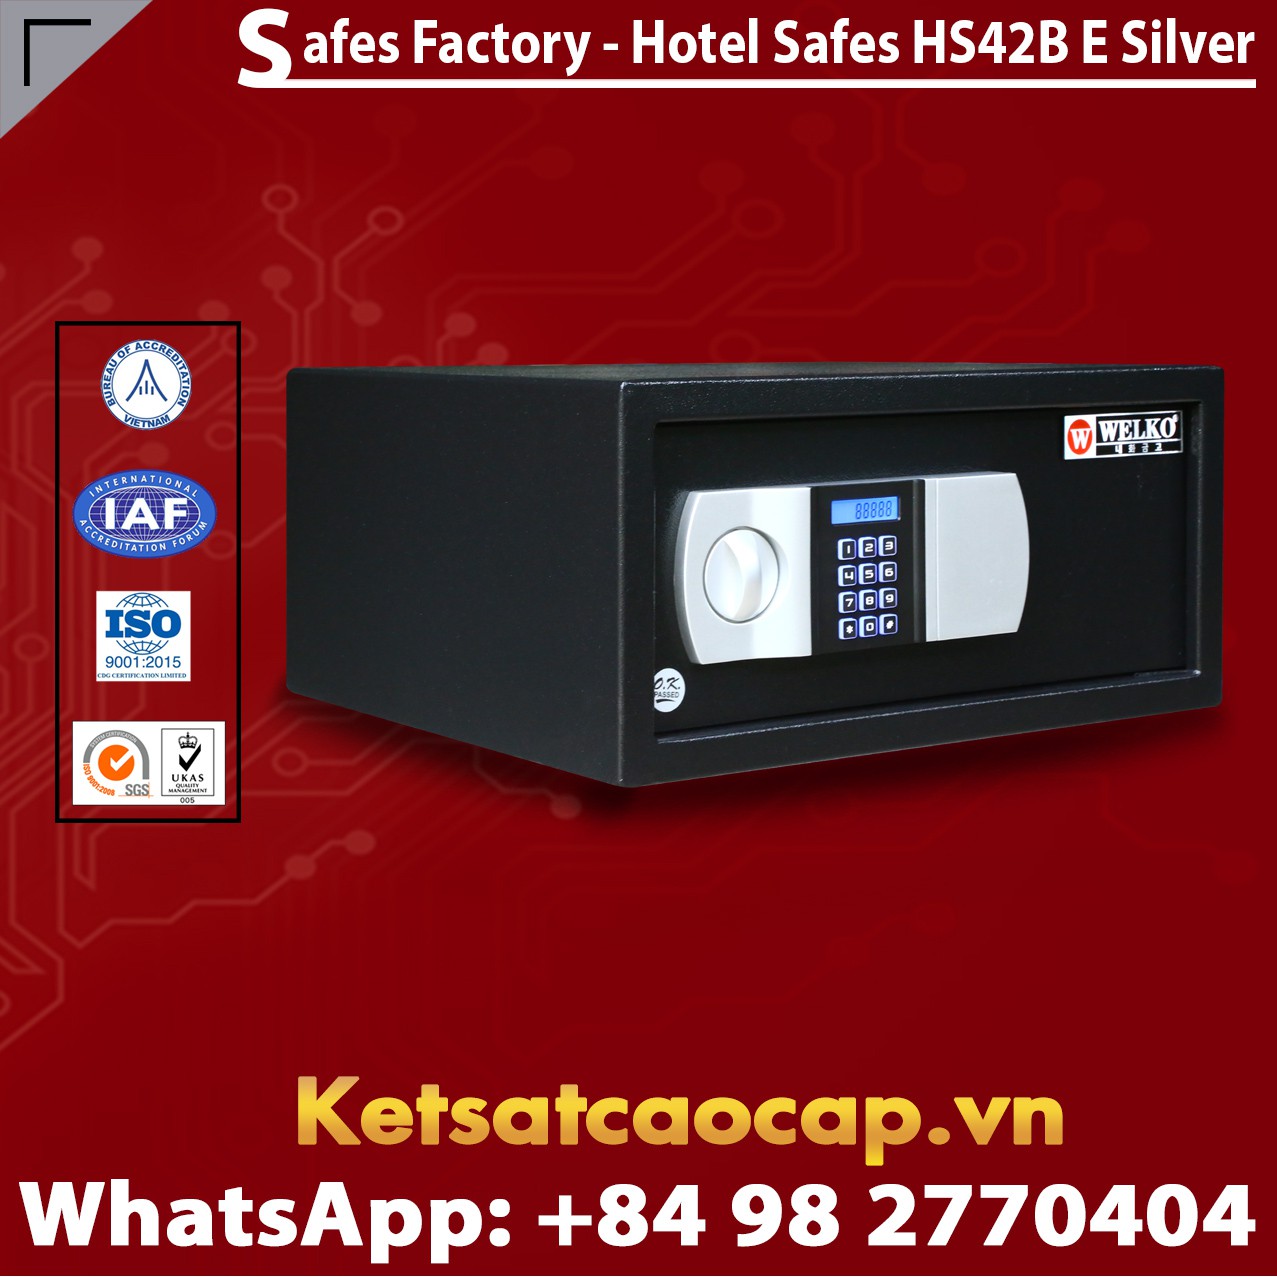 Safe in Hotel WELKO HS42 Black - E Silver